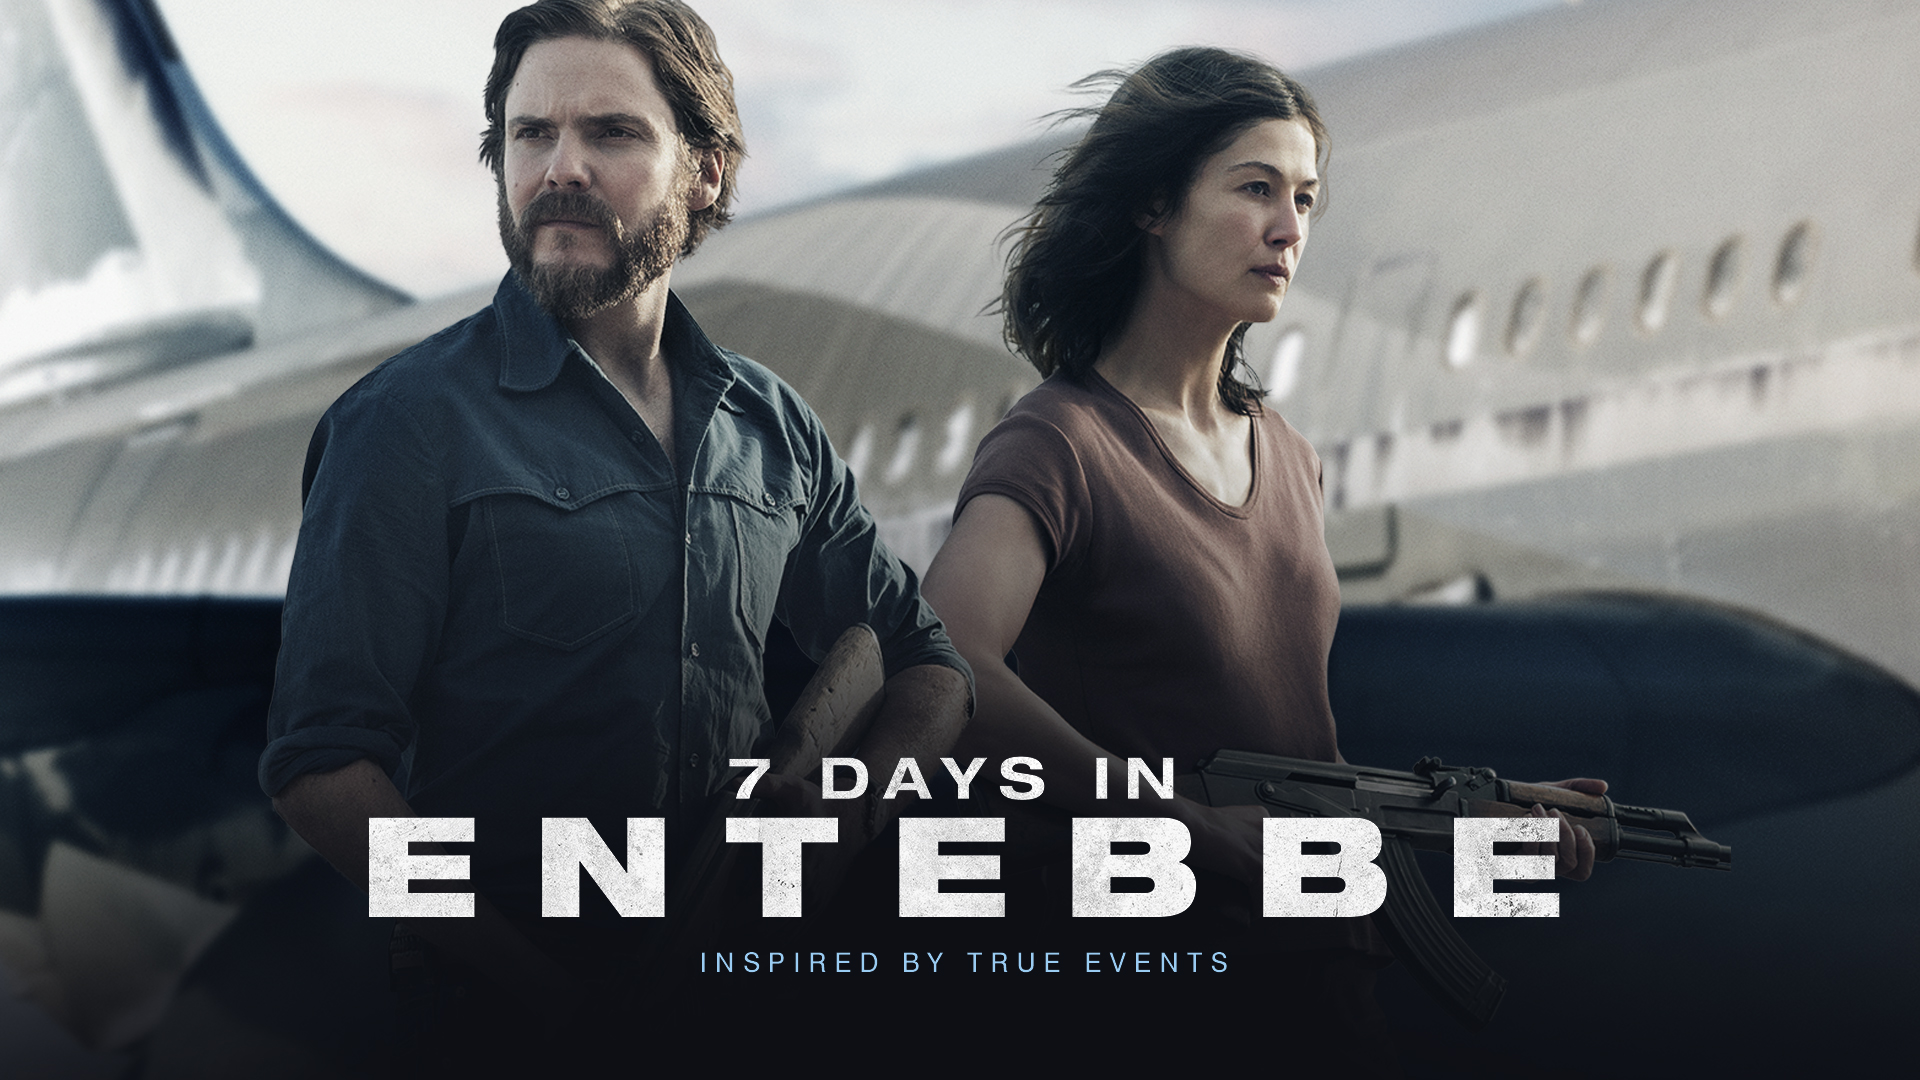 Chiến Dịch Entebbe – 7 Days in Entebbe (2018) Full HD Vietsub